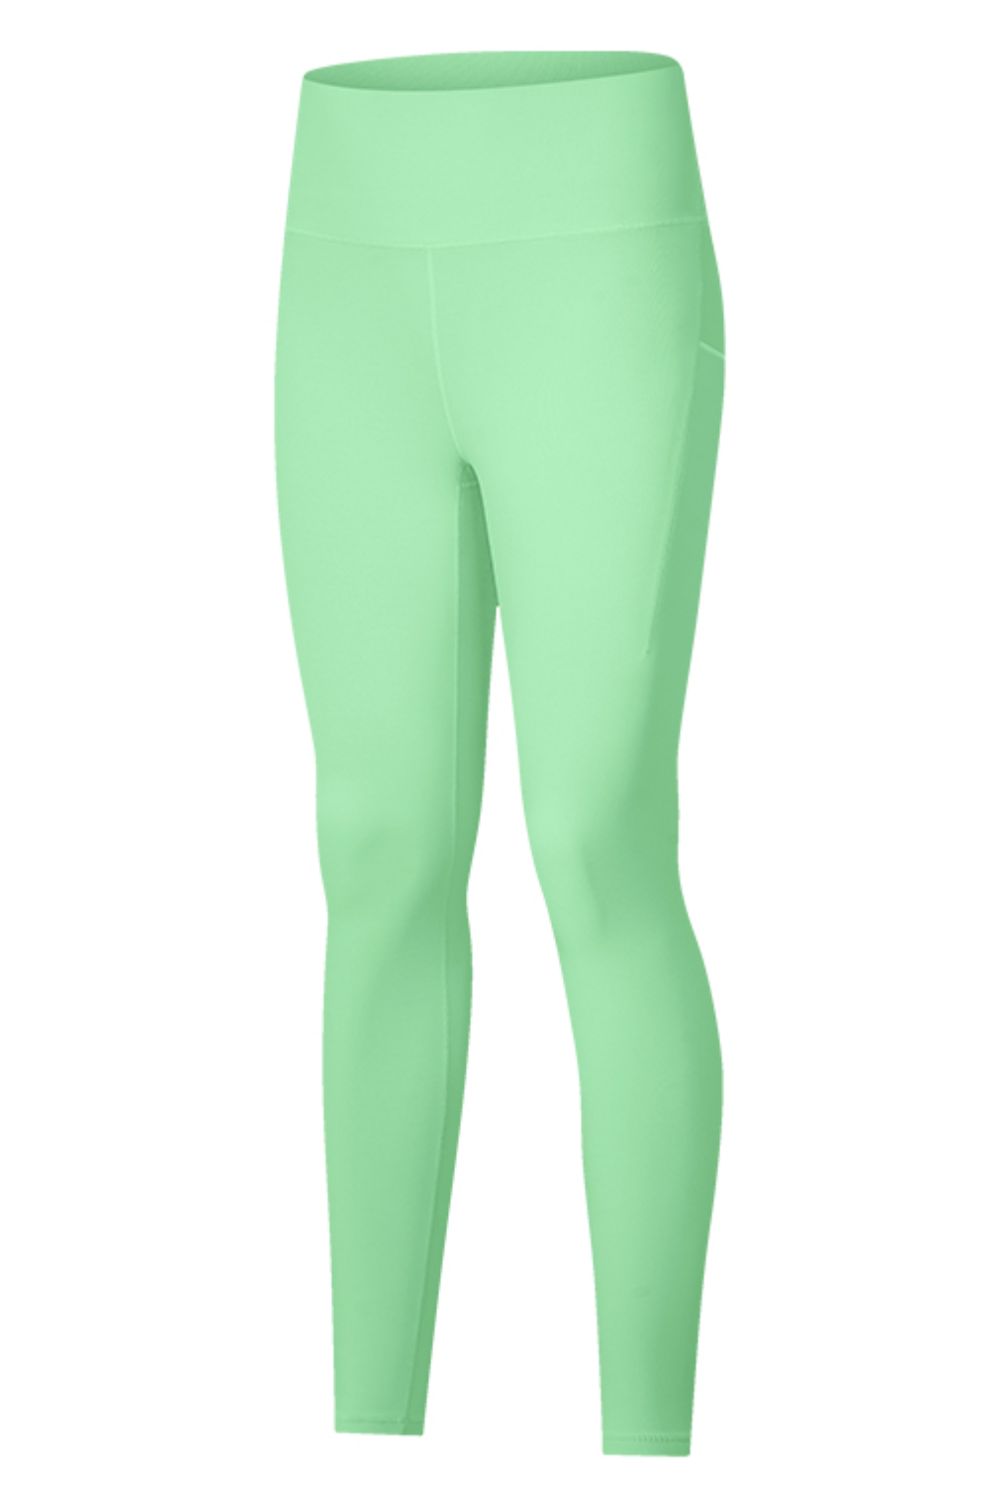 Pale Green High-Rise Wide Waistband Pocket Yoga Leggings activewear